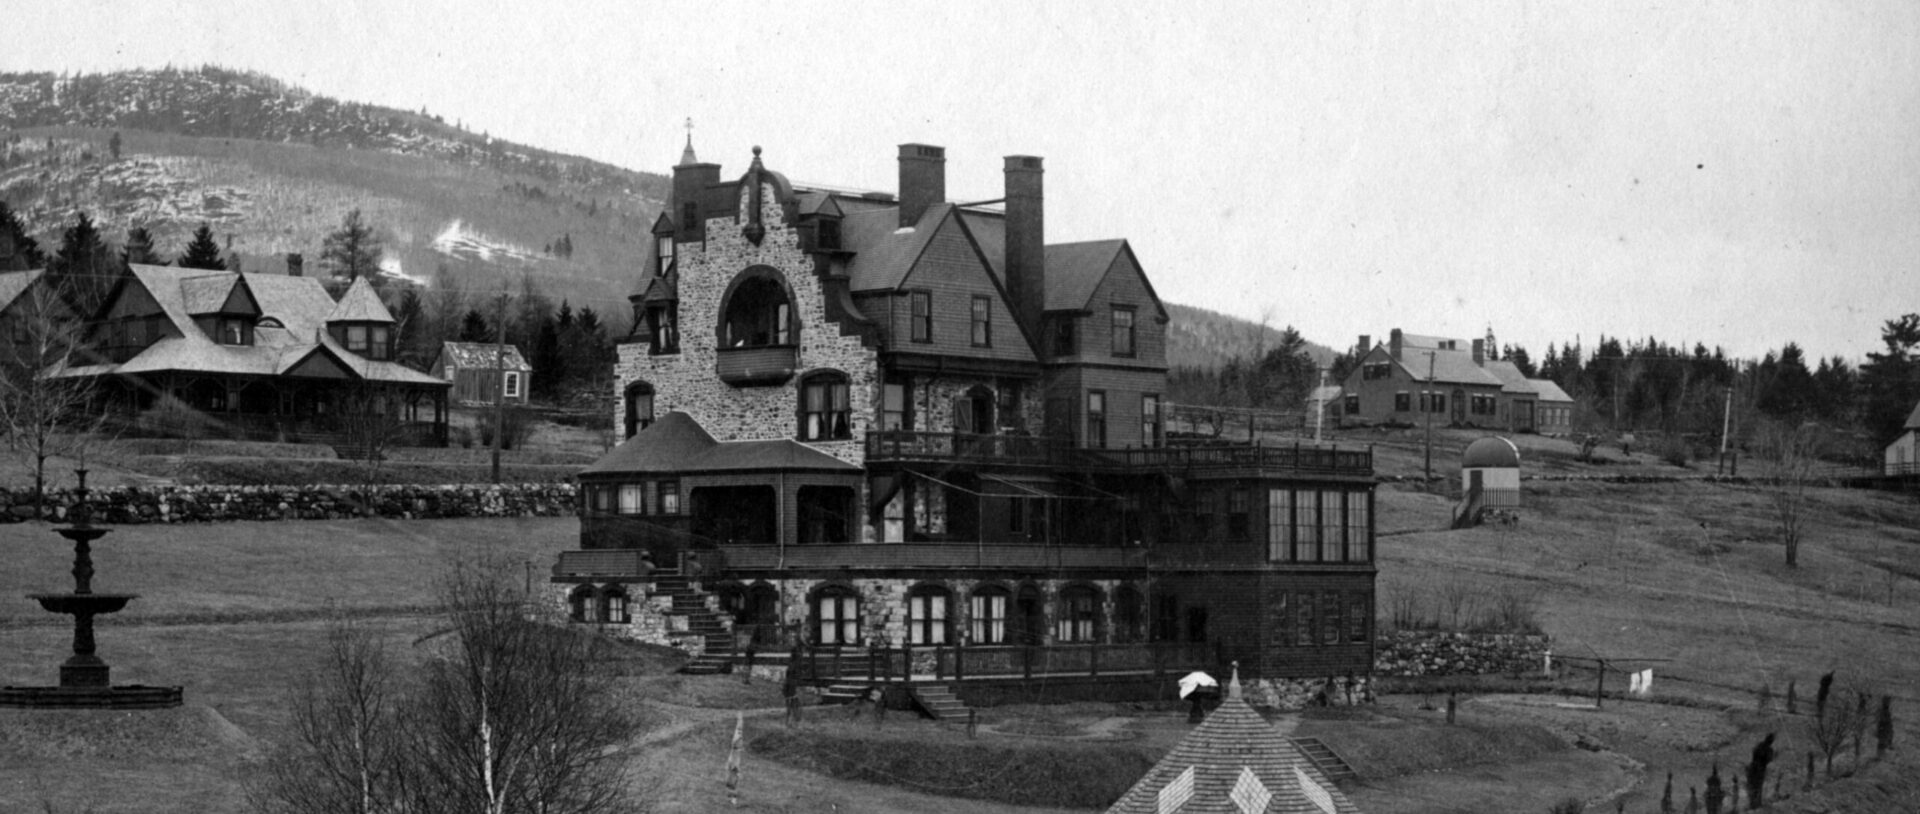 A black and white photo of the Norumbega Inn 1831